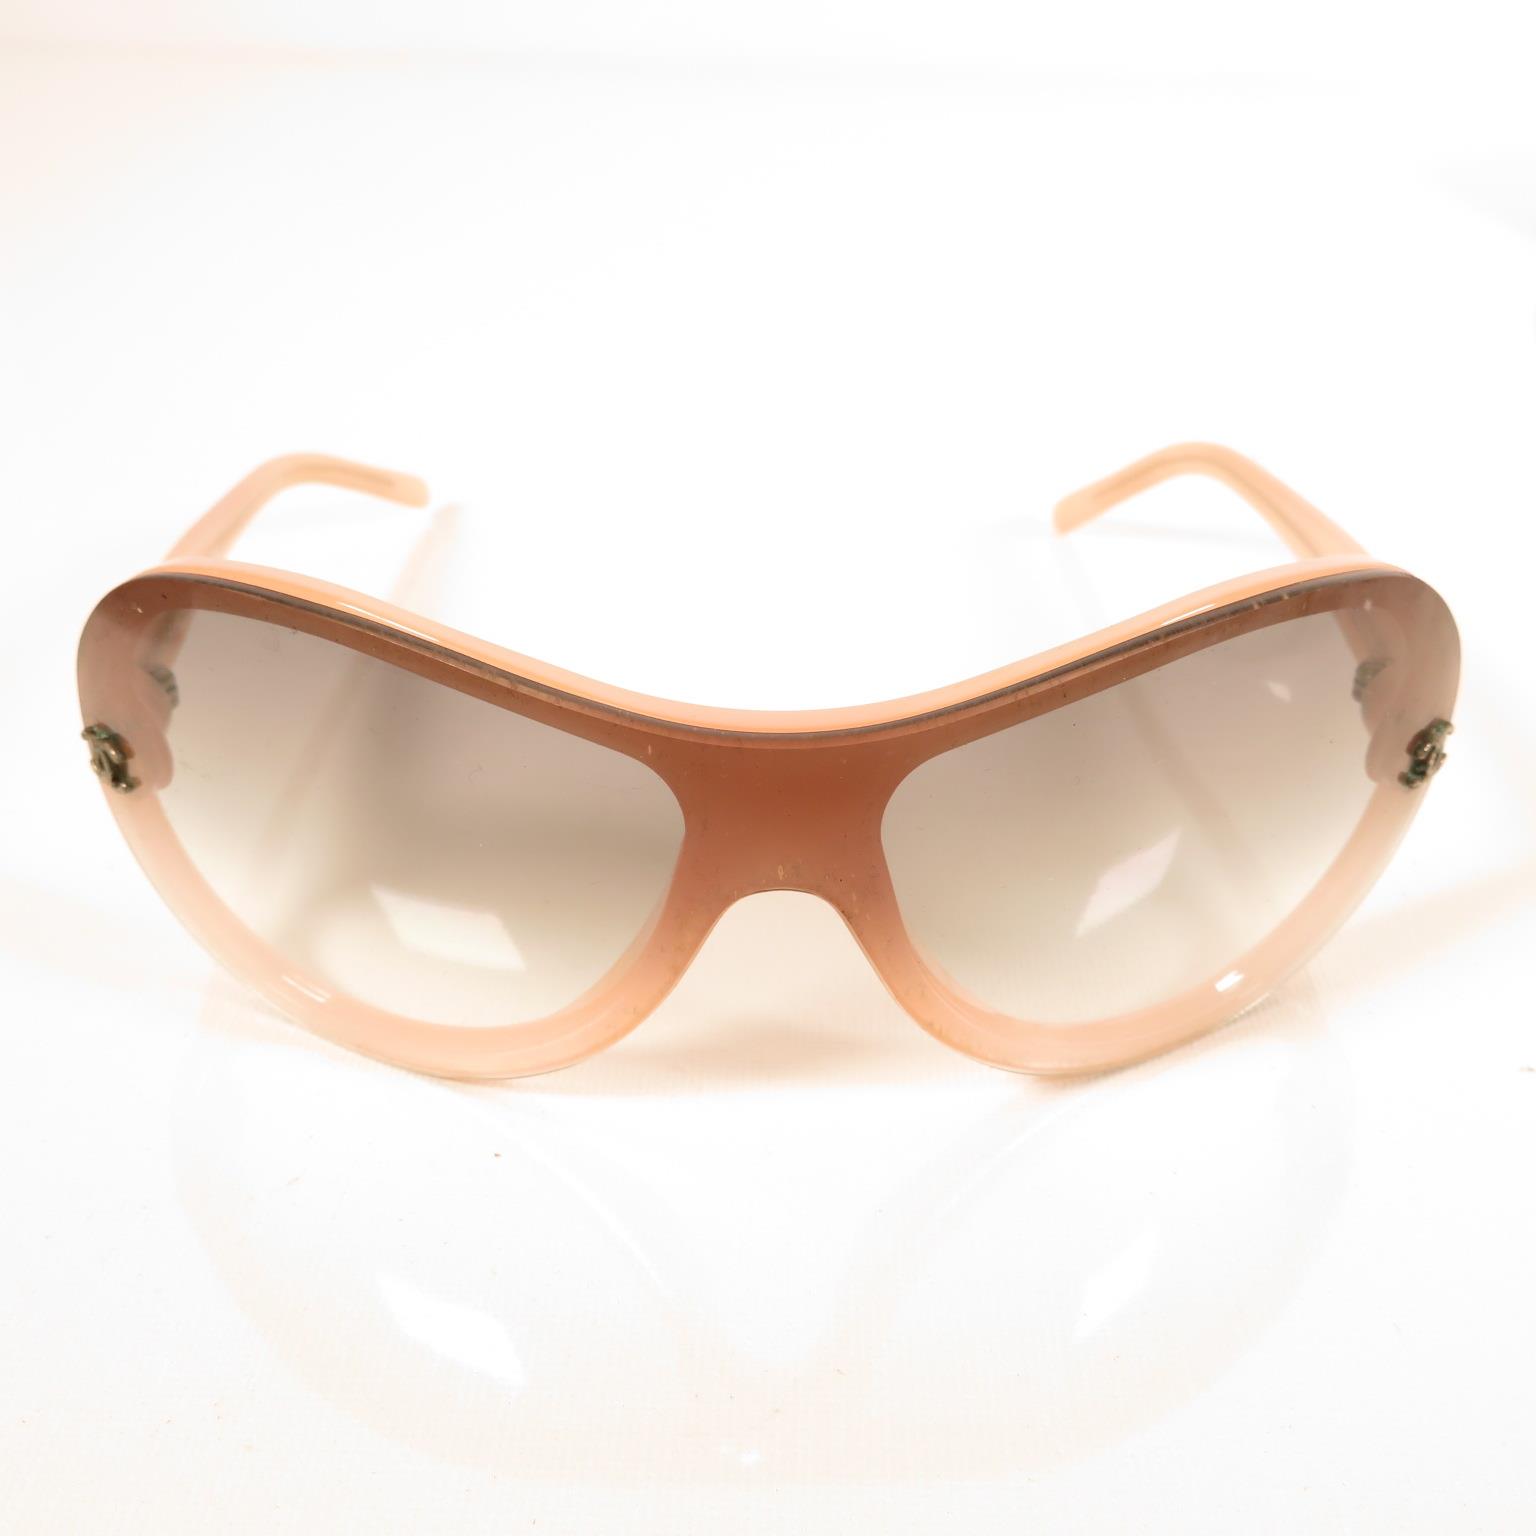 5x sets of Ray Ban sunglasses - - Image 3 of 23